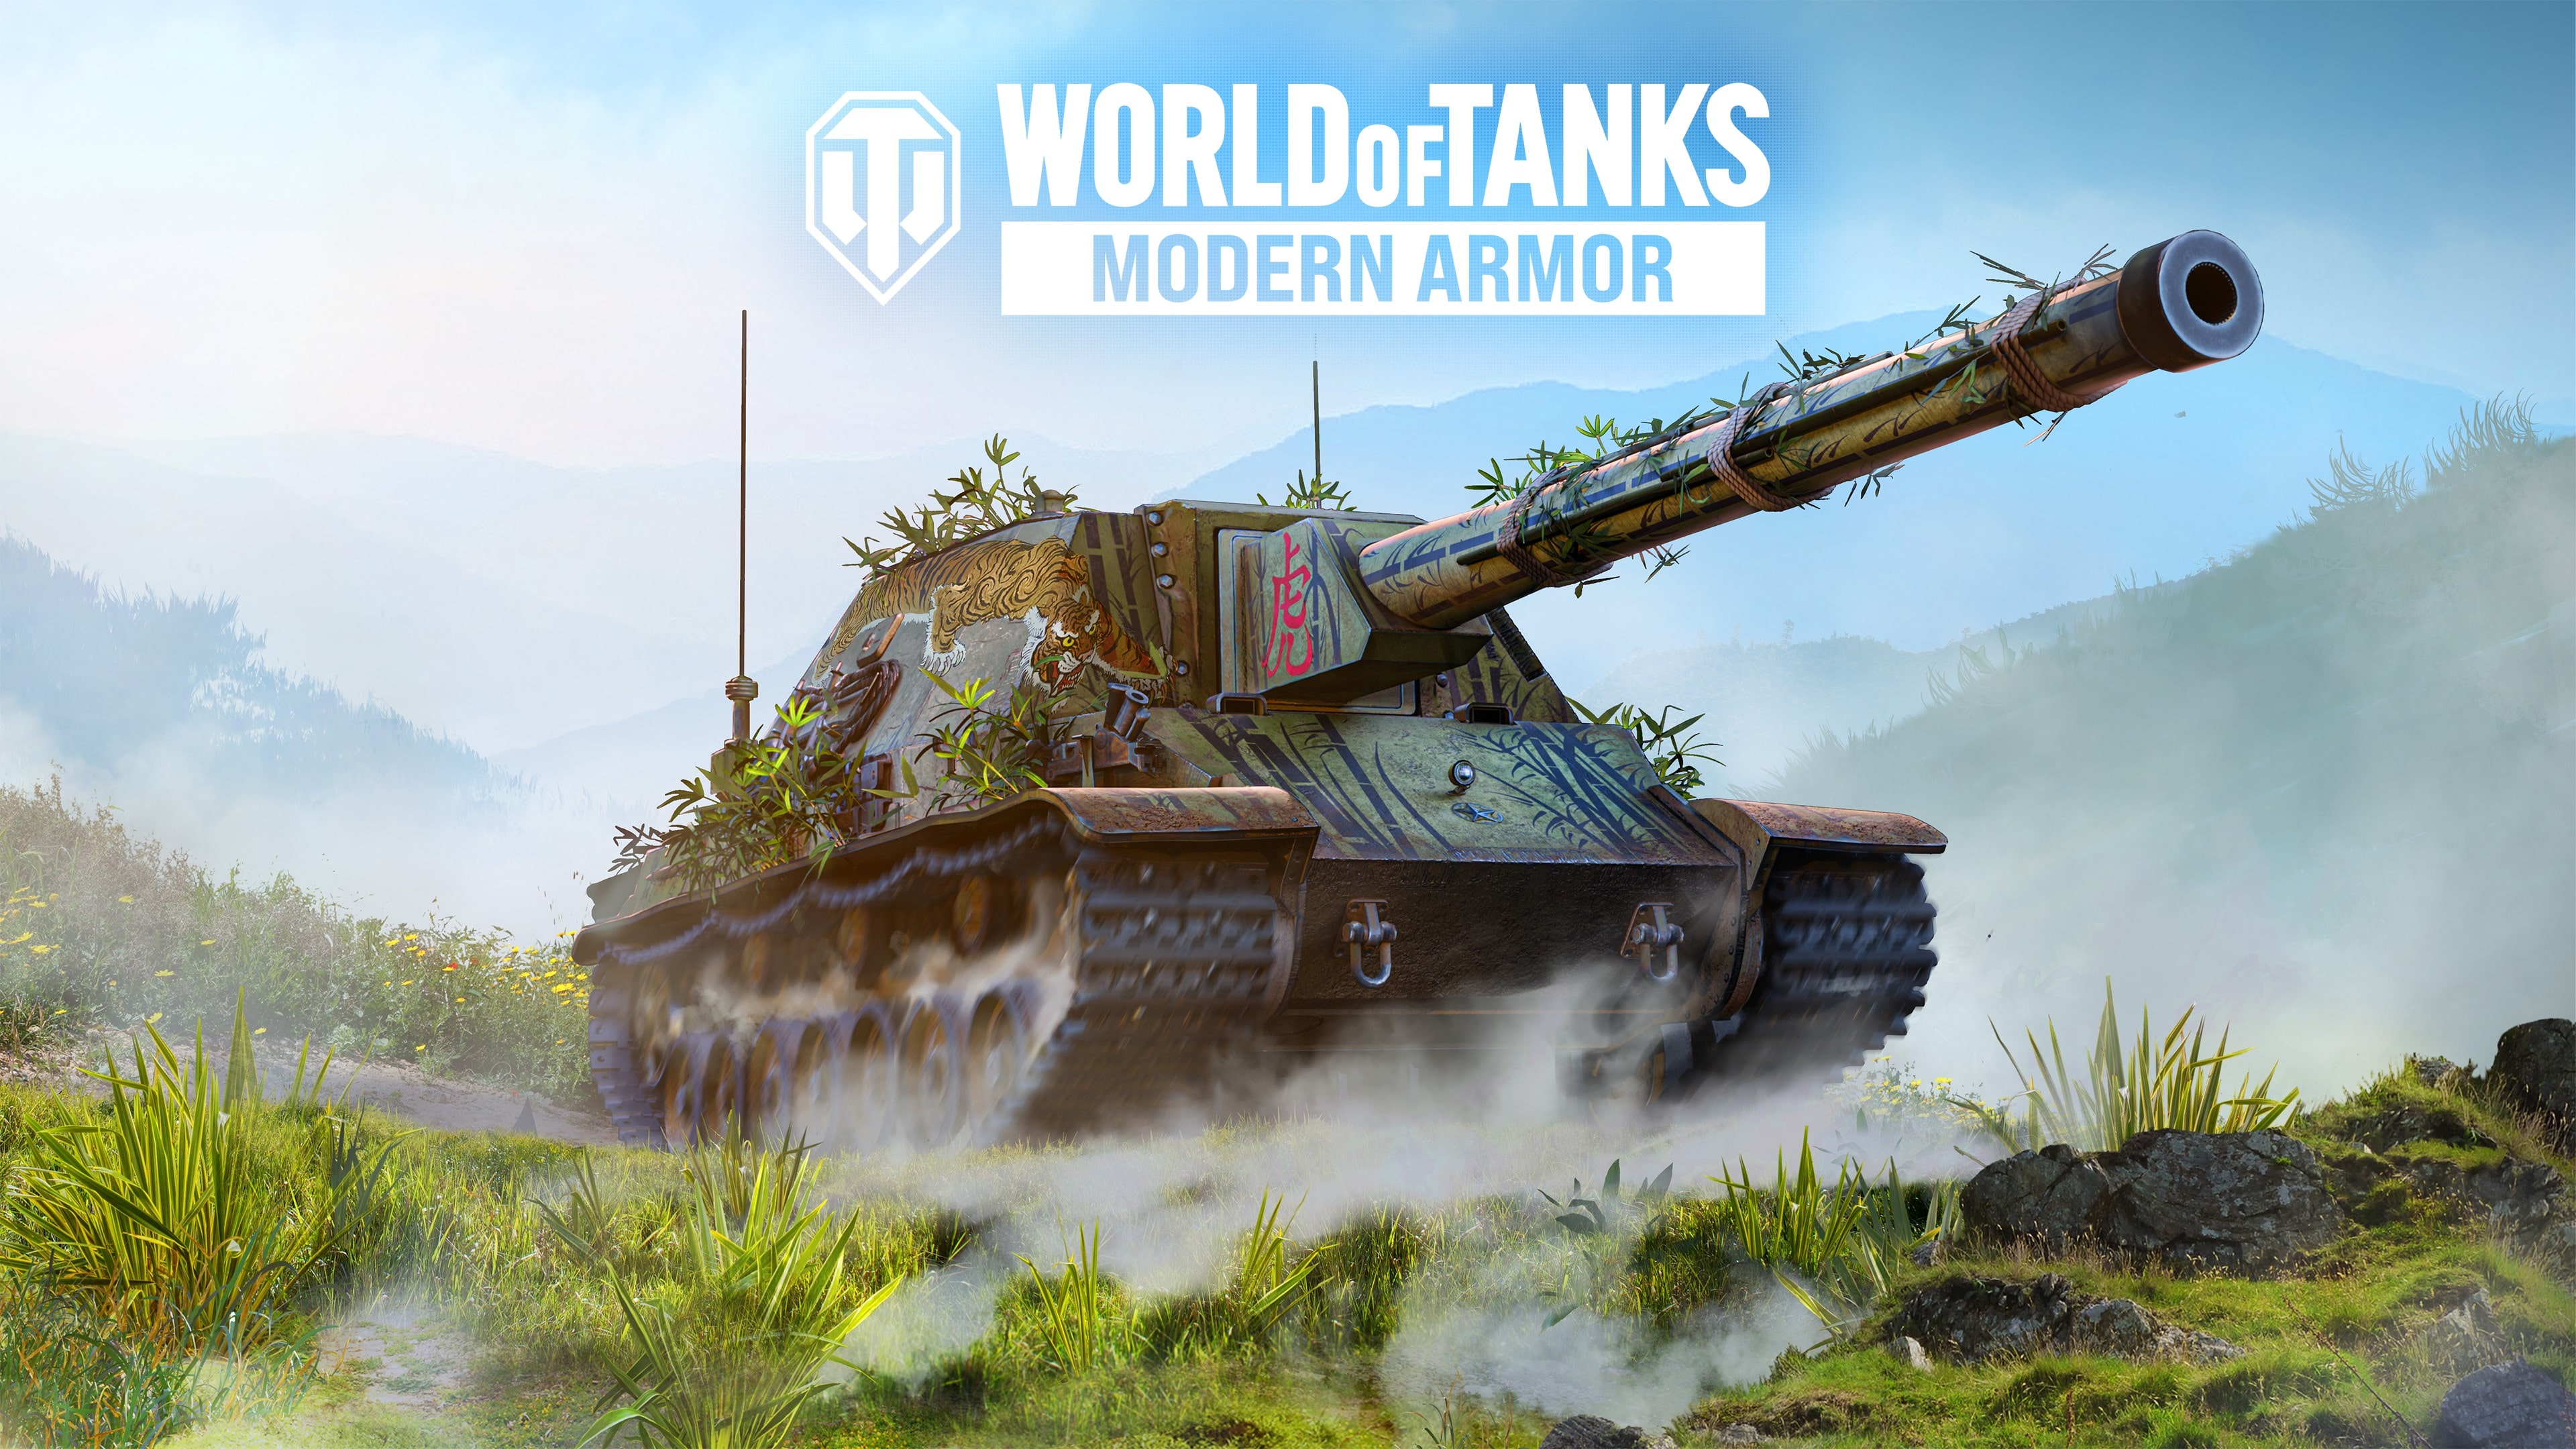 World of Tanks Modern Armor (English, Japanese)